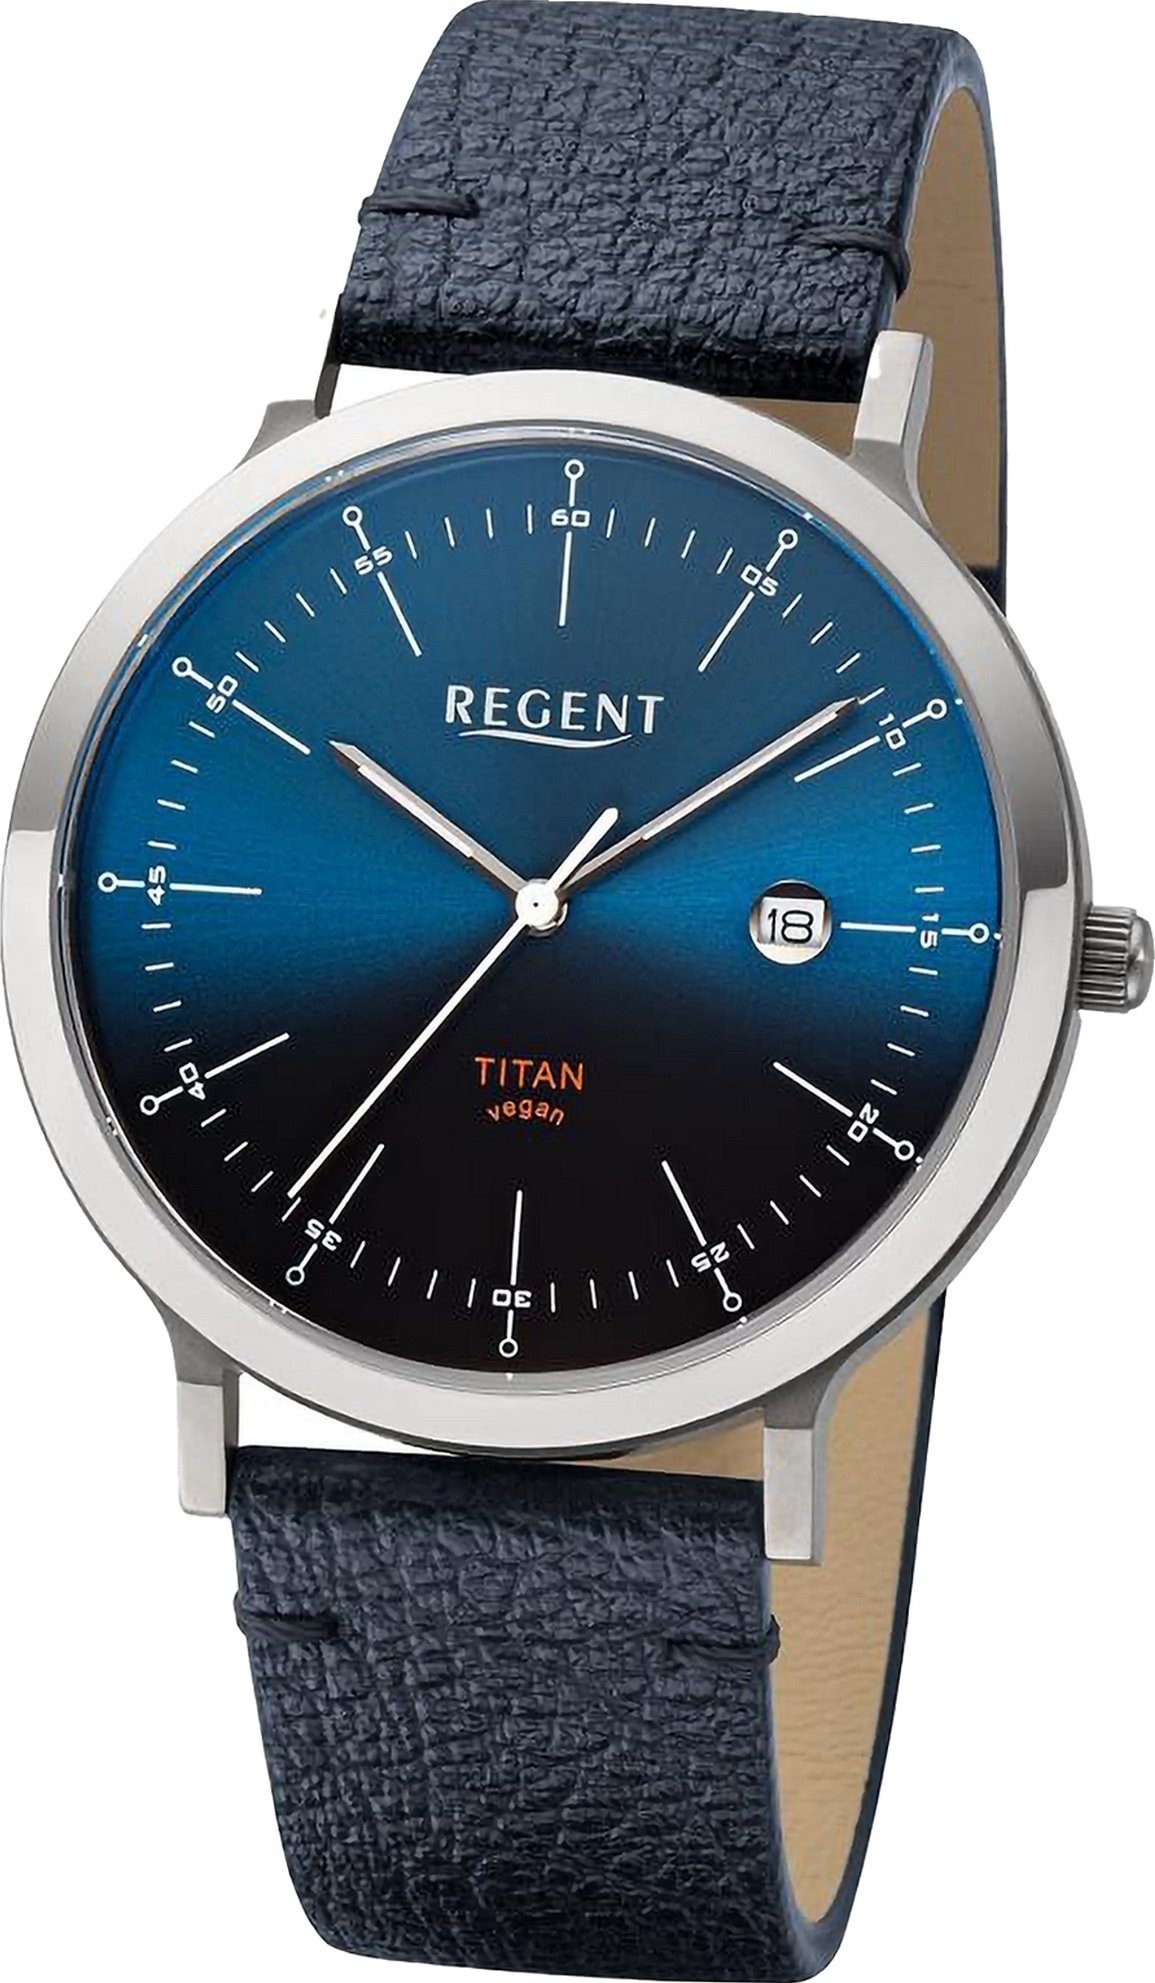 Regent Quarzuhr Armbanduhr extra Herren (ca. Analog, Lederarmband rund, Herren Armbanduhr groß Regent 40mm)